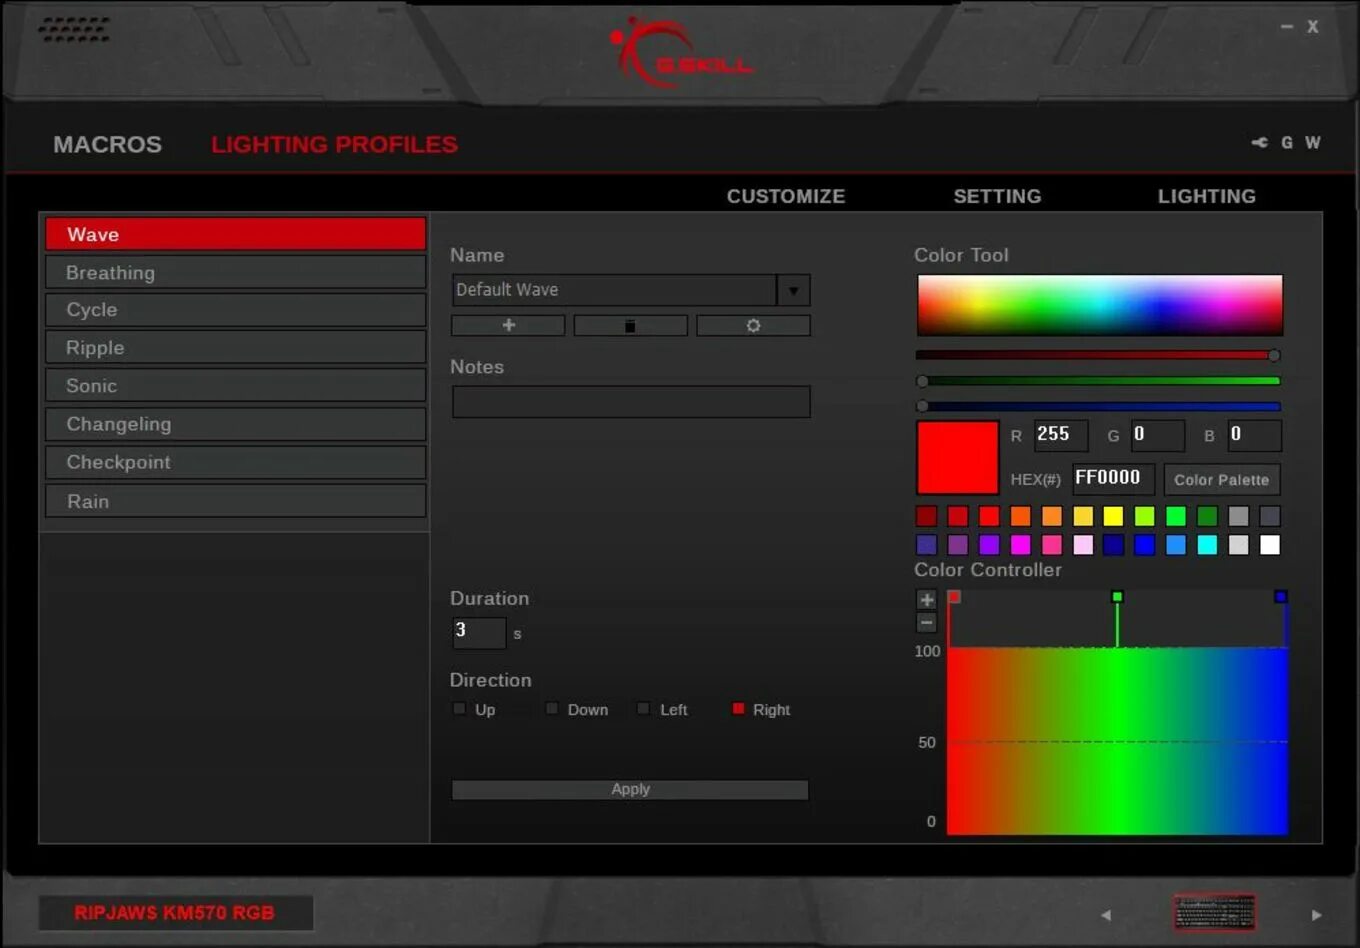 Color tool. G.skill Ripjaws mx780 RGB. G skill подсветка программа. Skills Pro настройка. G.skill маркировка производителя чипов.